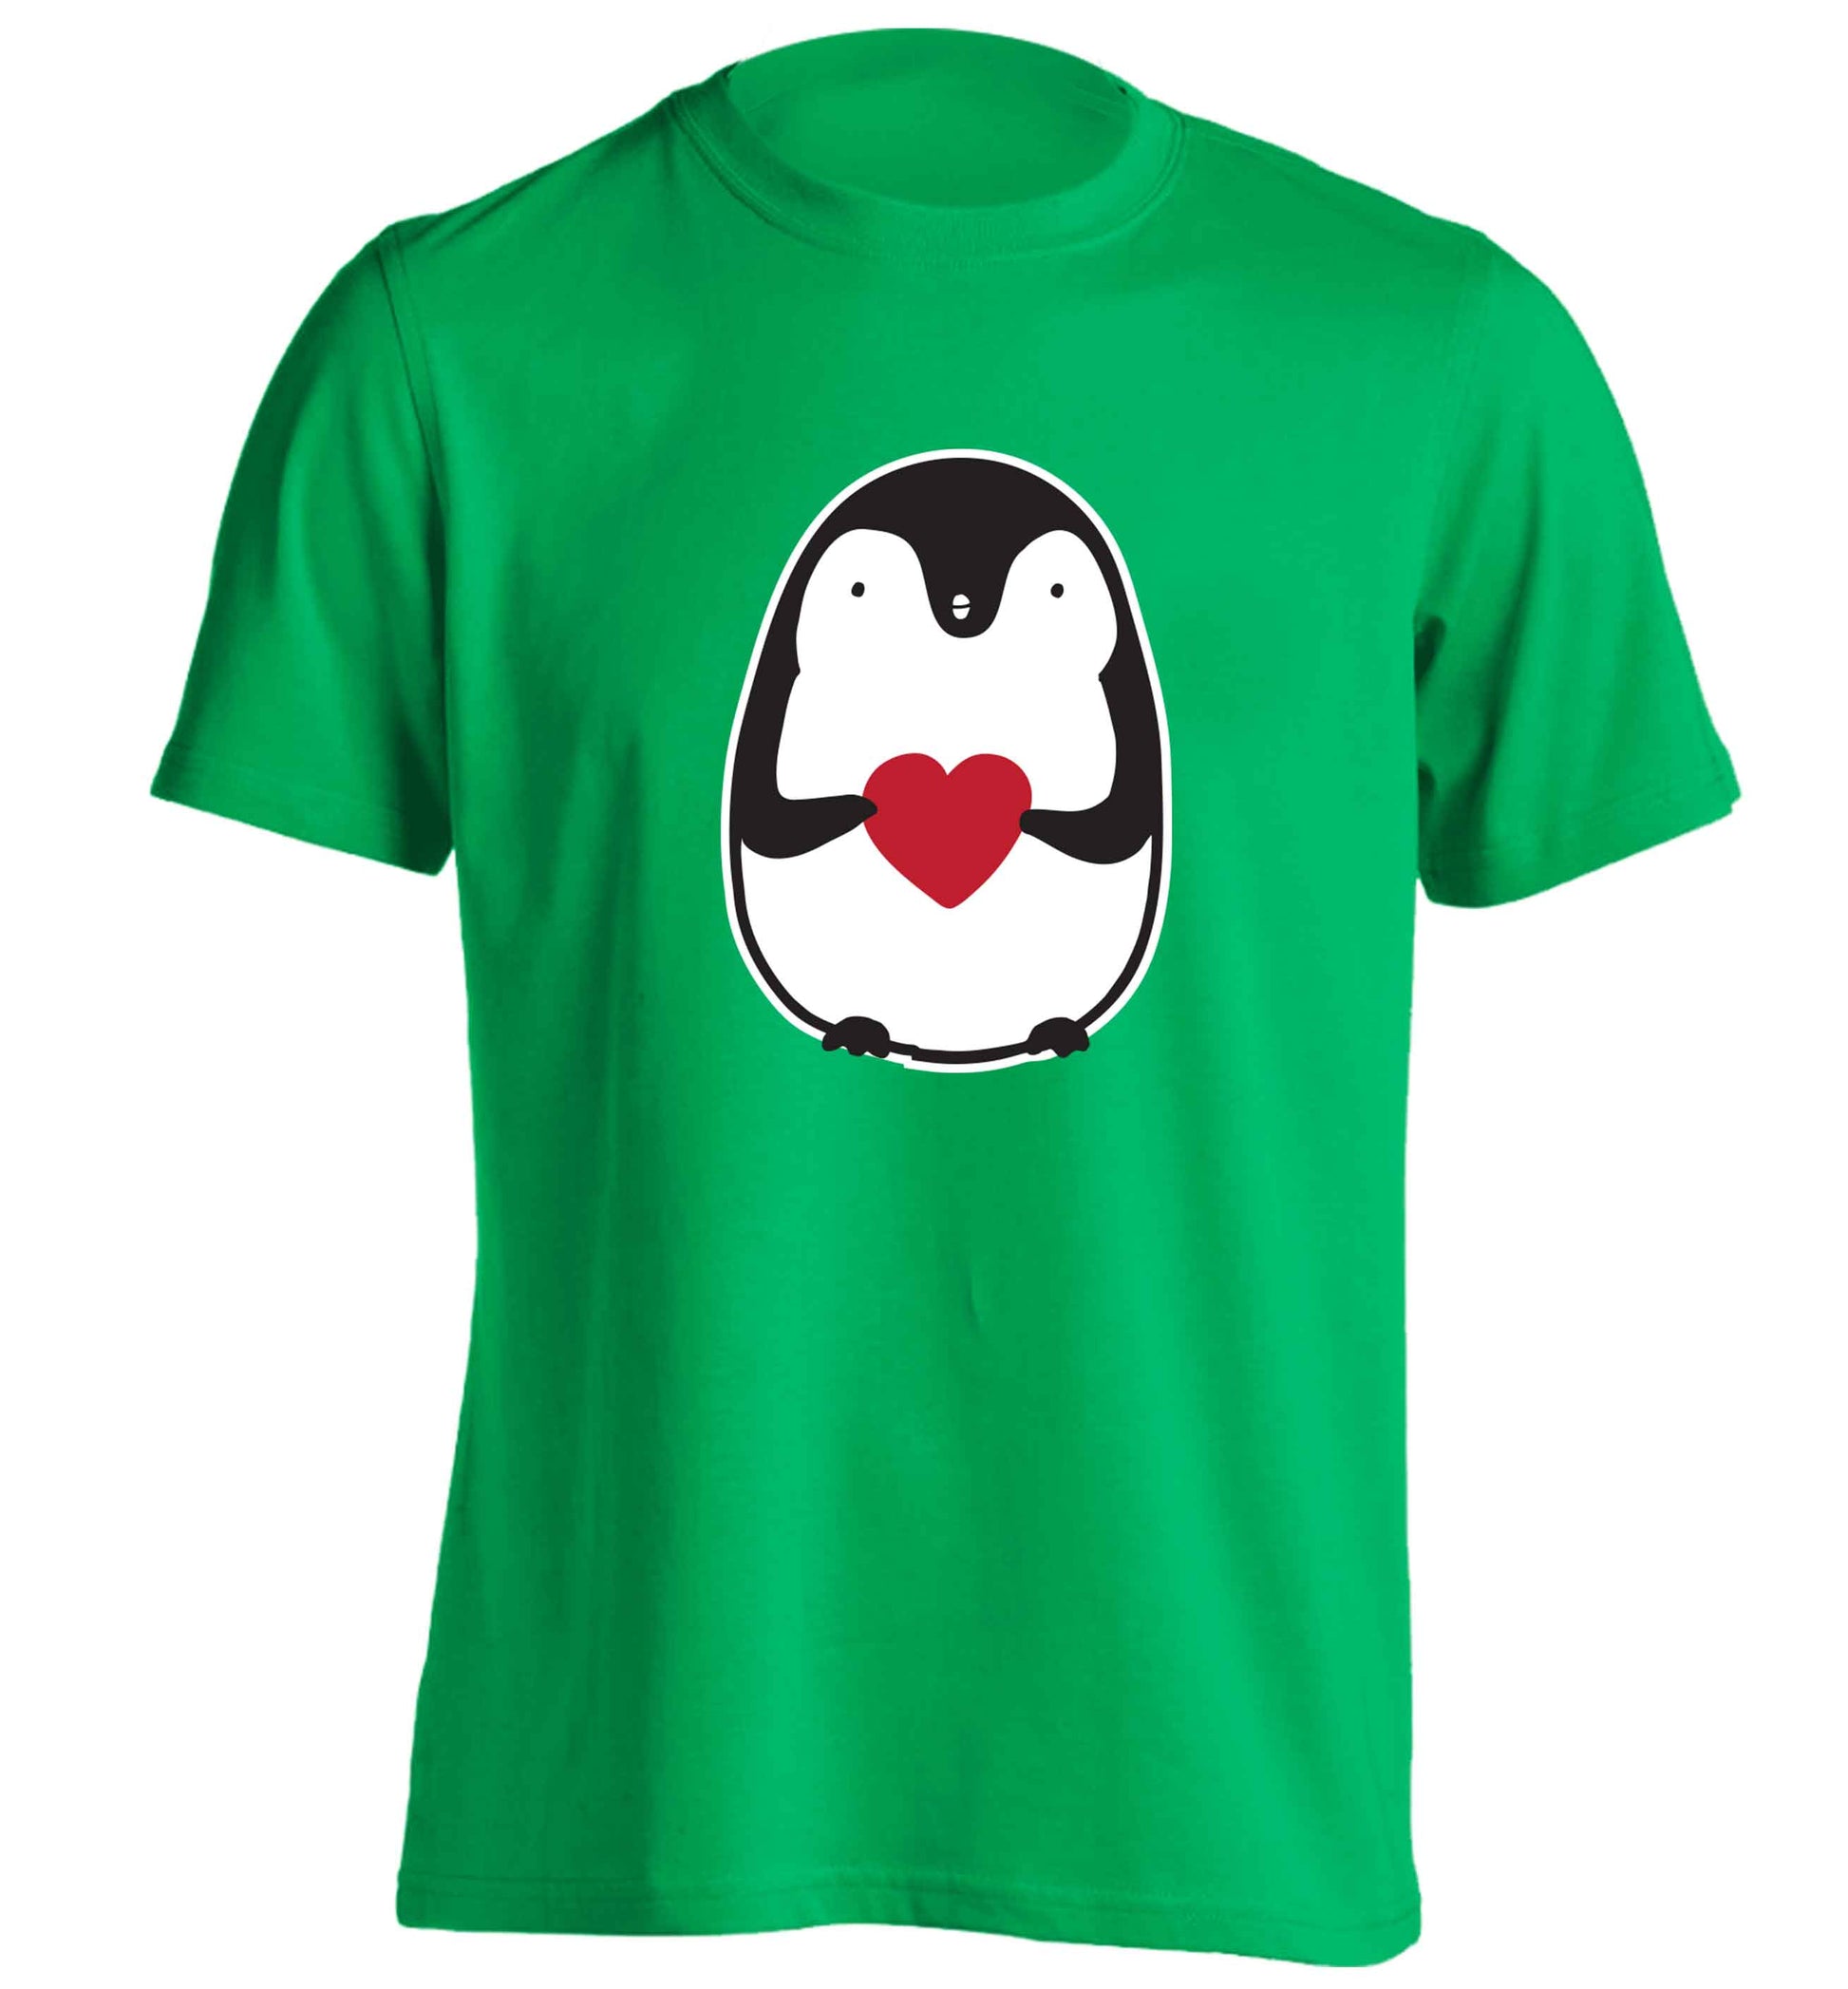 Cute penguin heart adults unisex green Tshirt 2XL